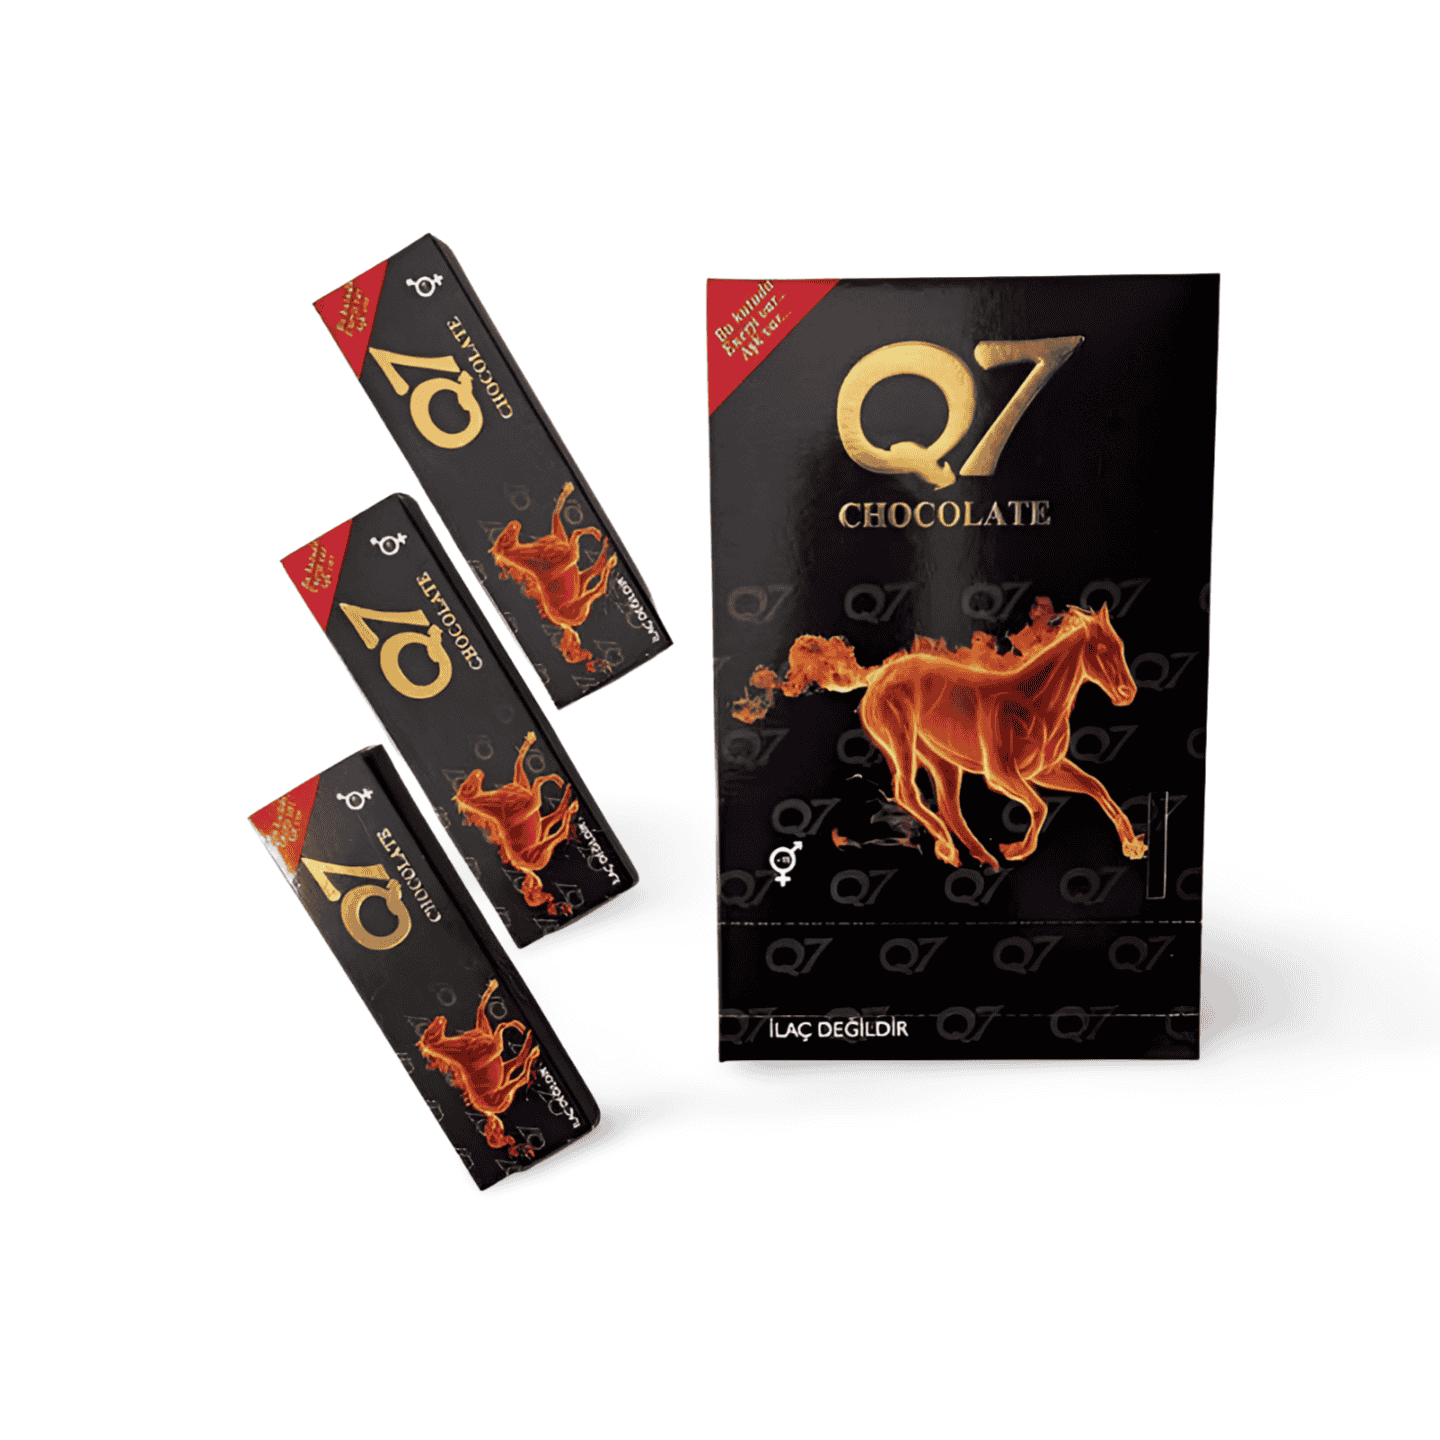 Q7 Chocolate